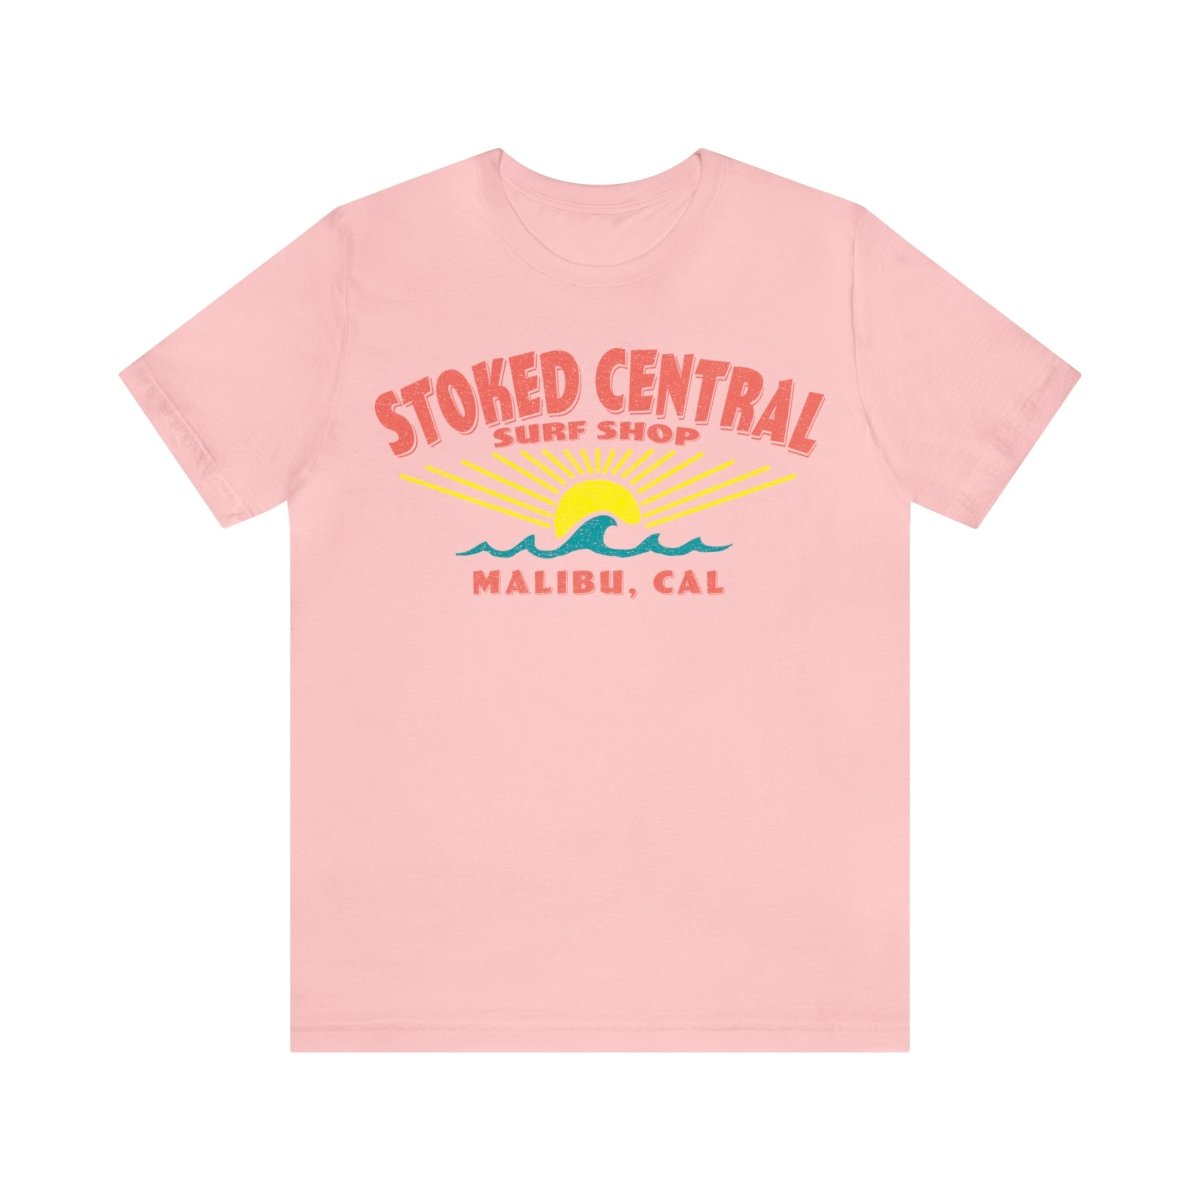 Stoked Central Surf Shop Premium T-Shirt, Malibu, California